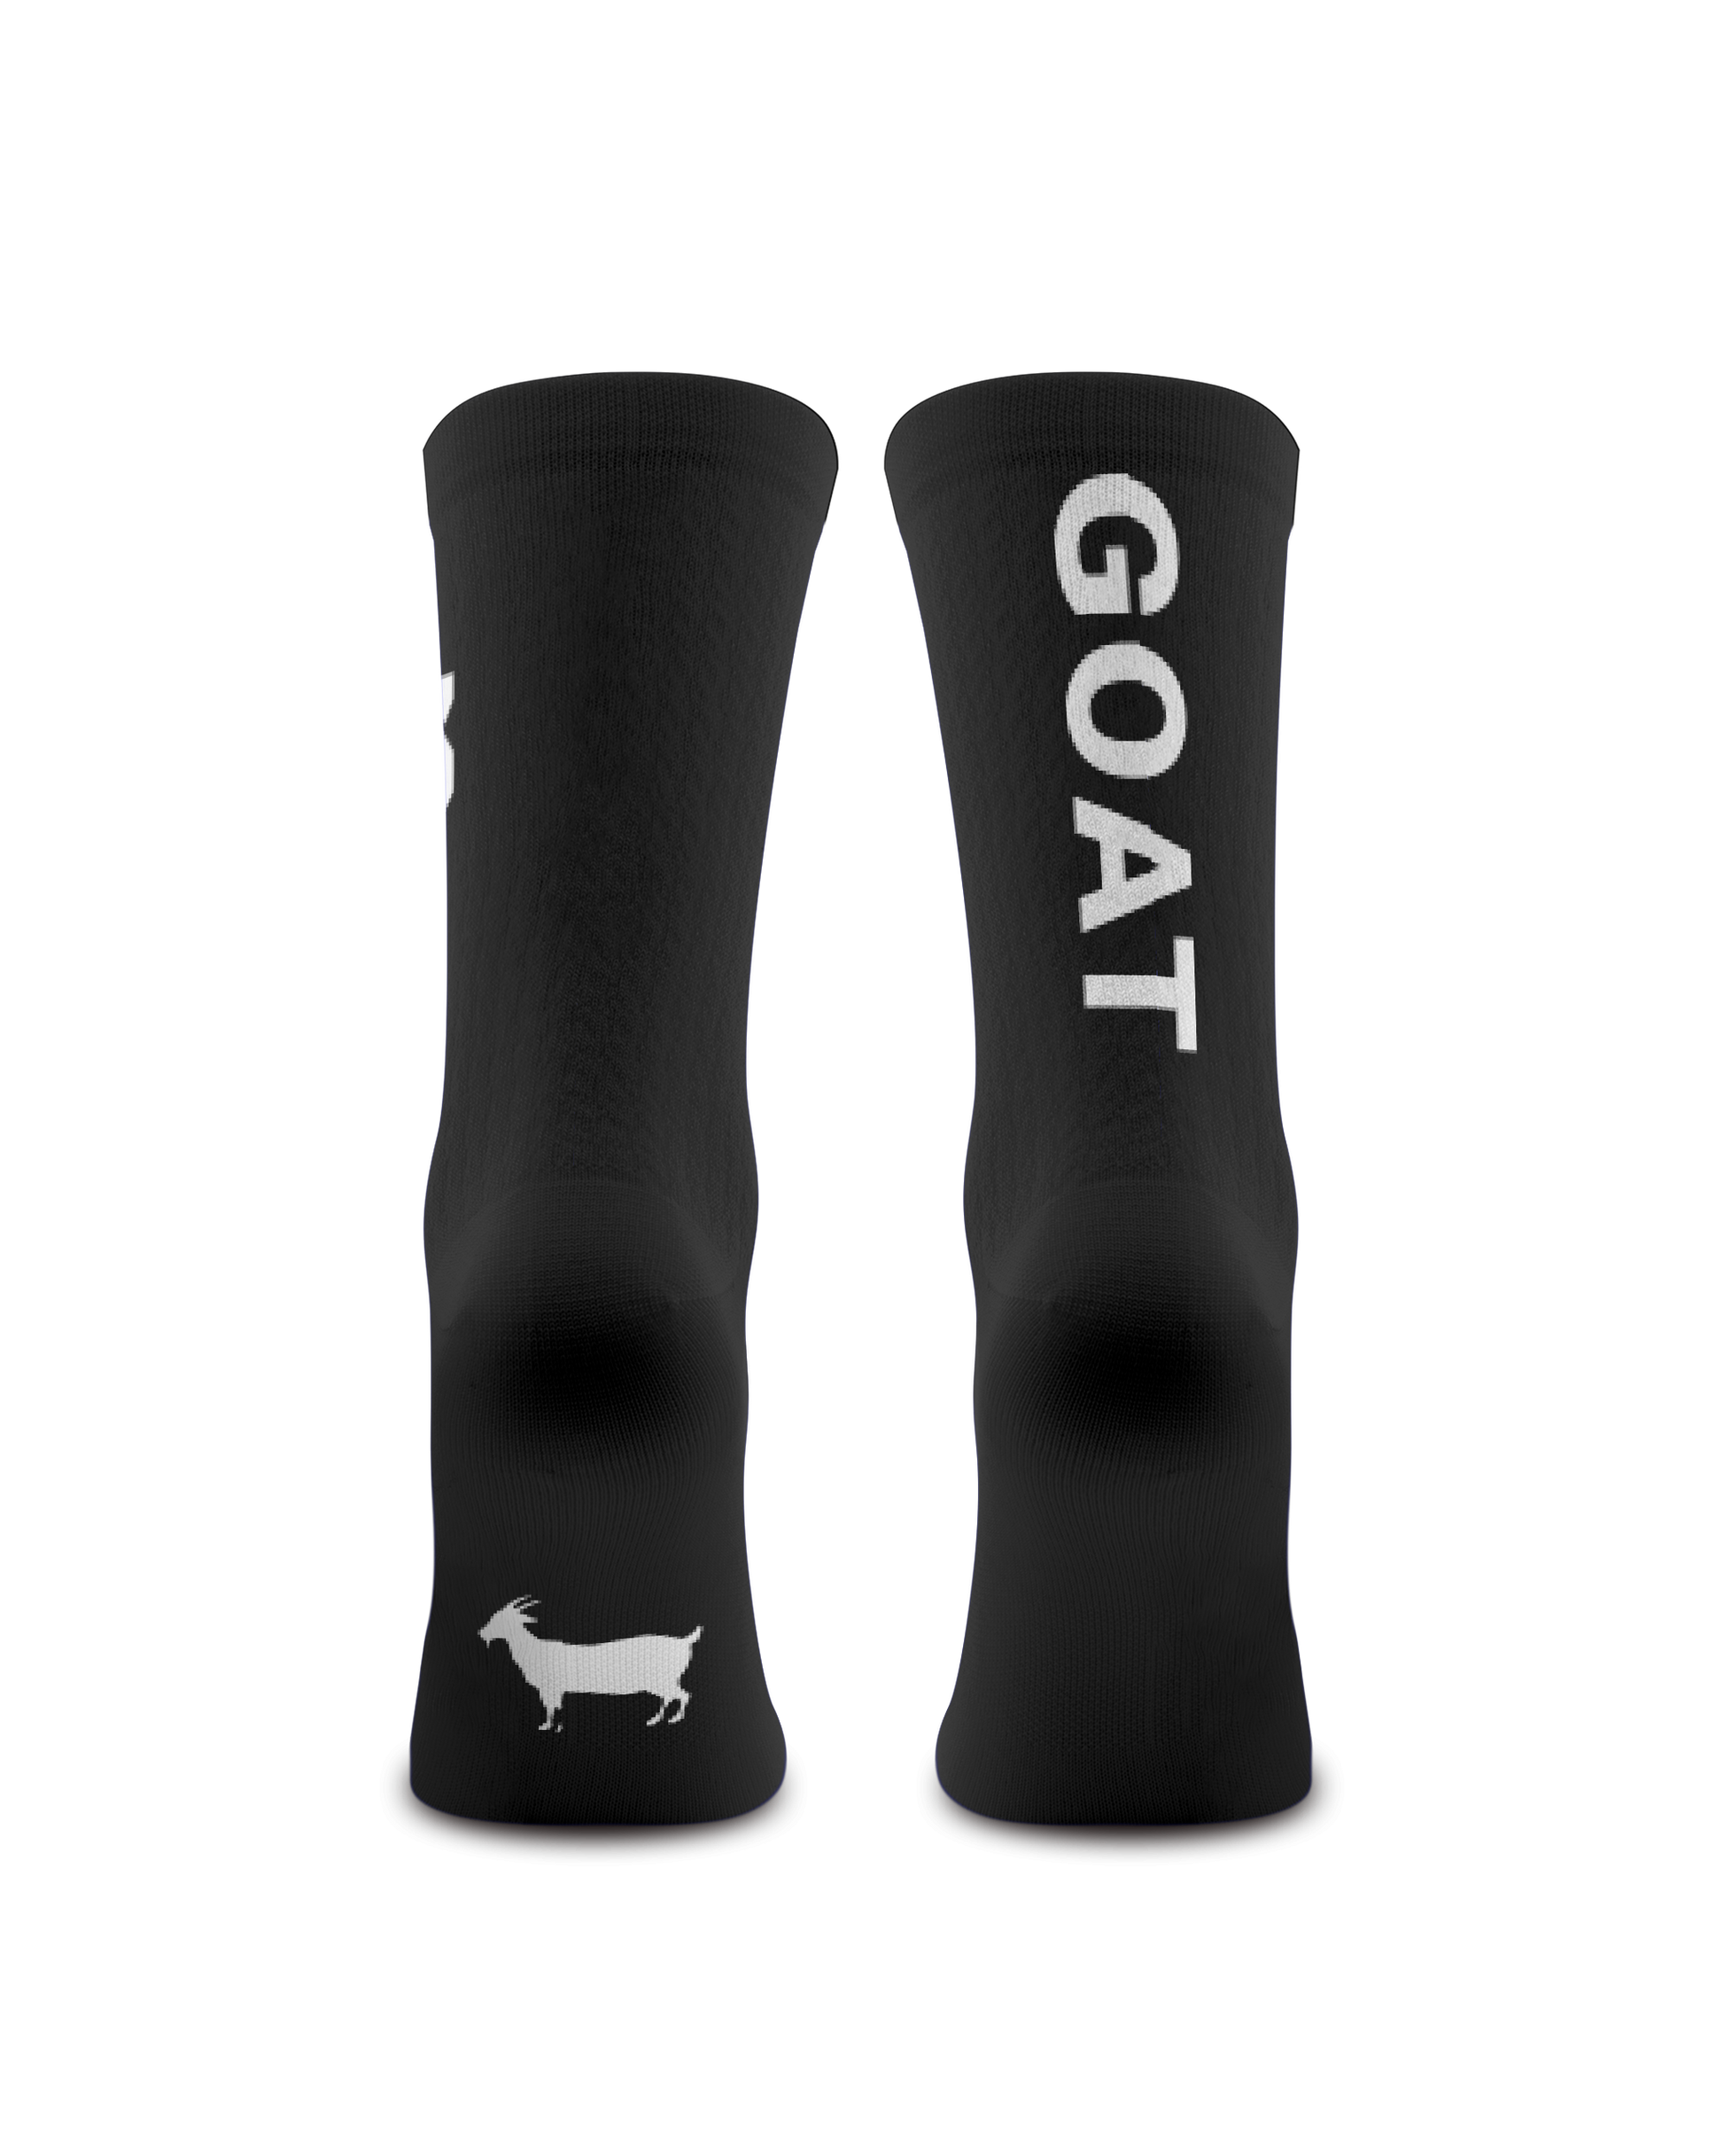 sockeloen-goat-cycling-socks